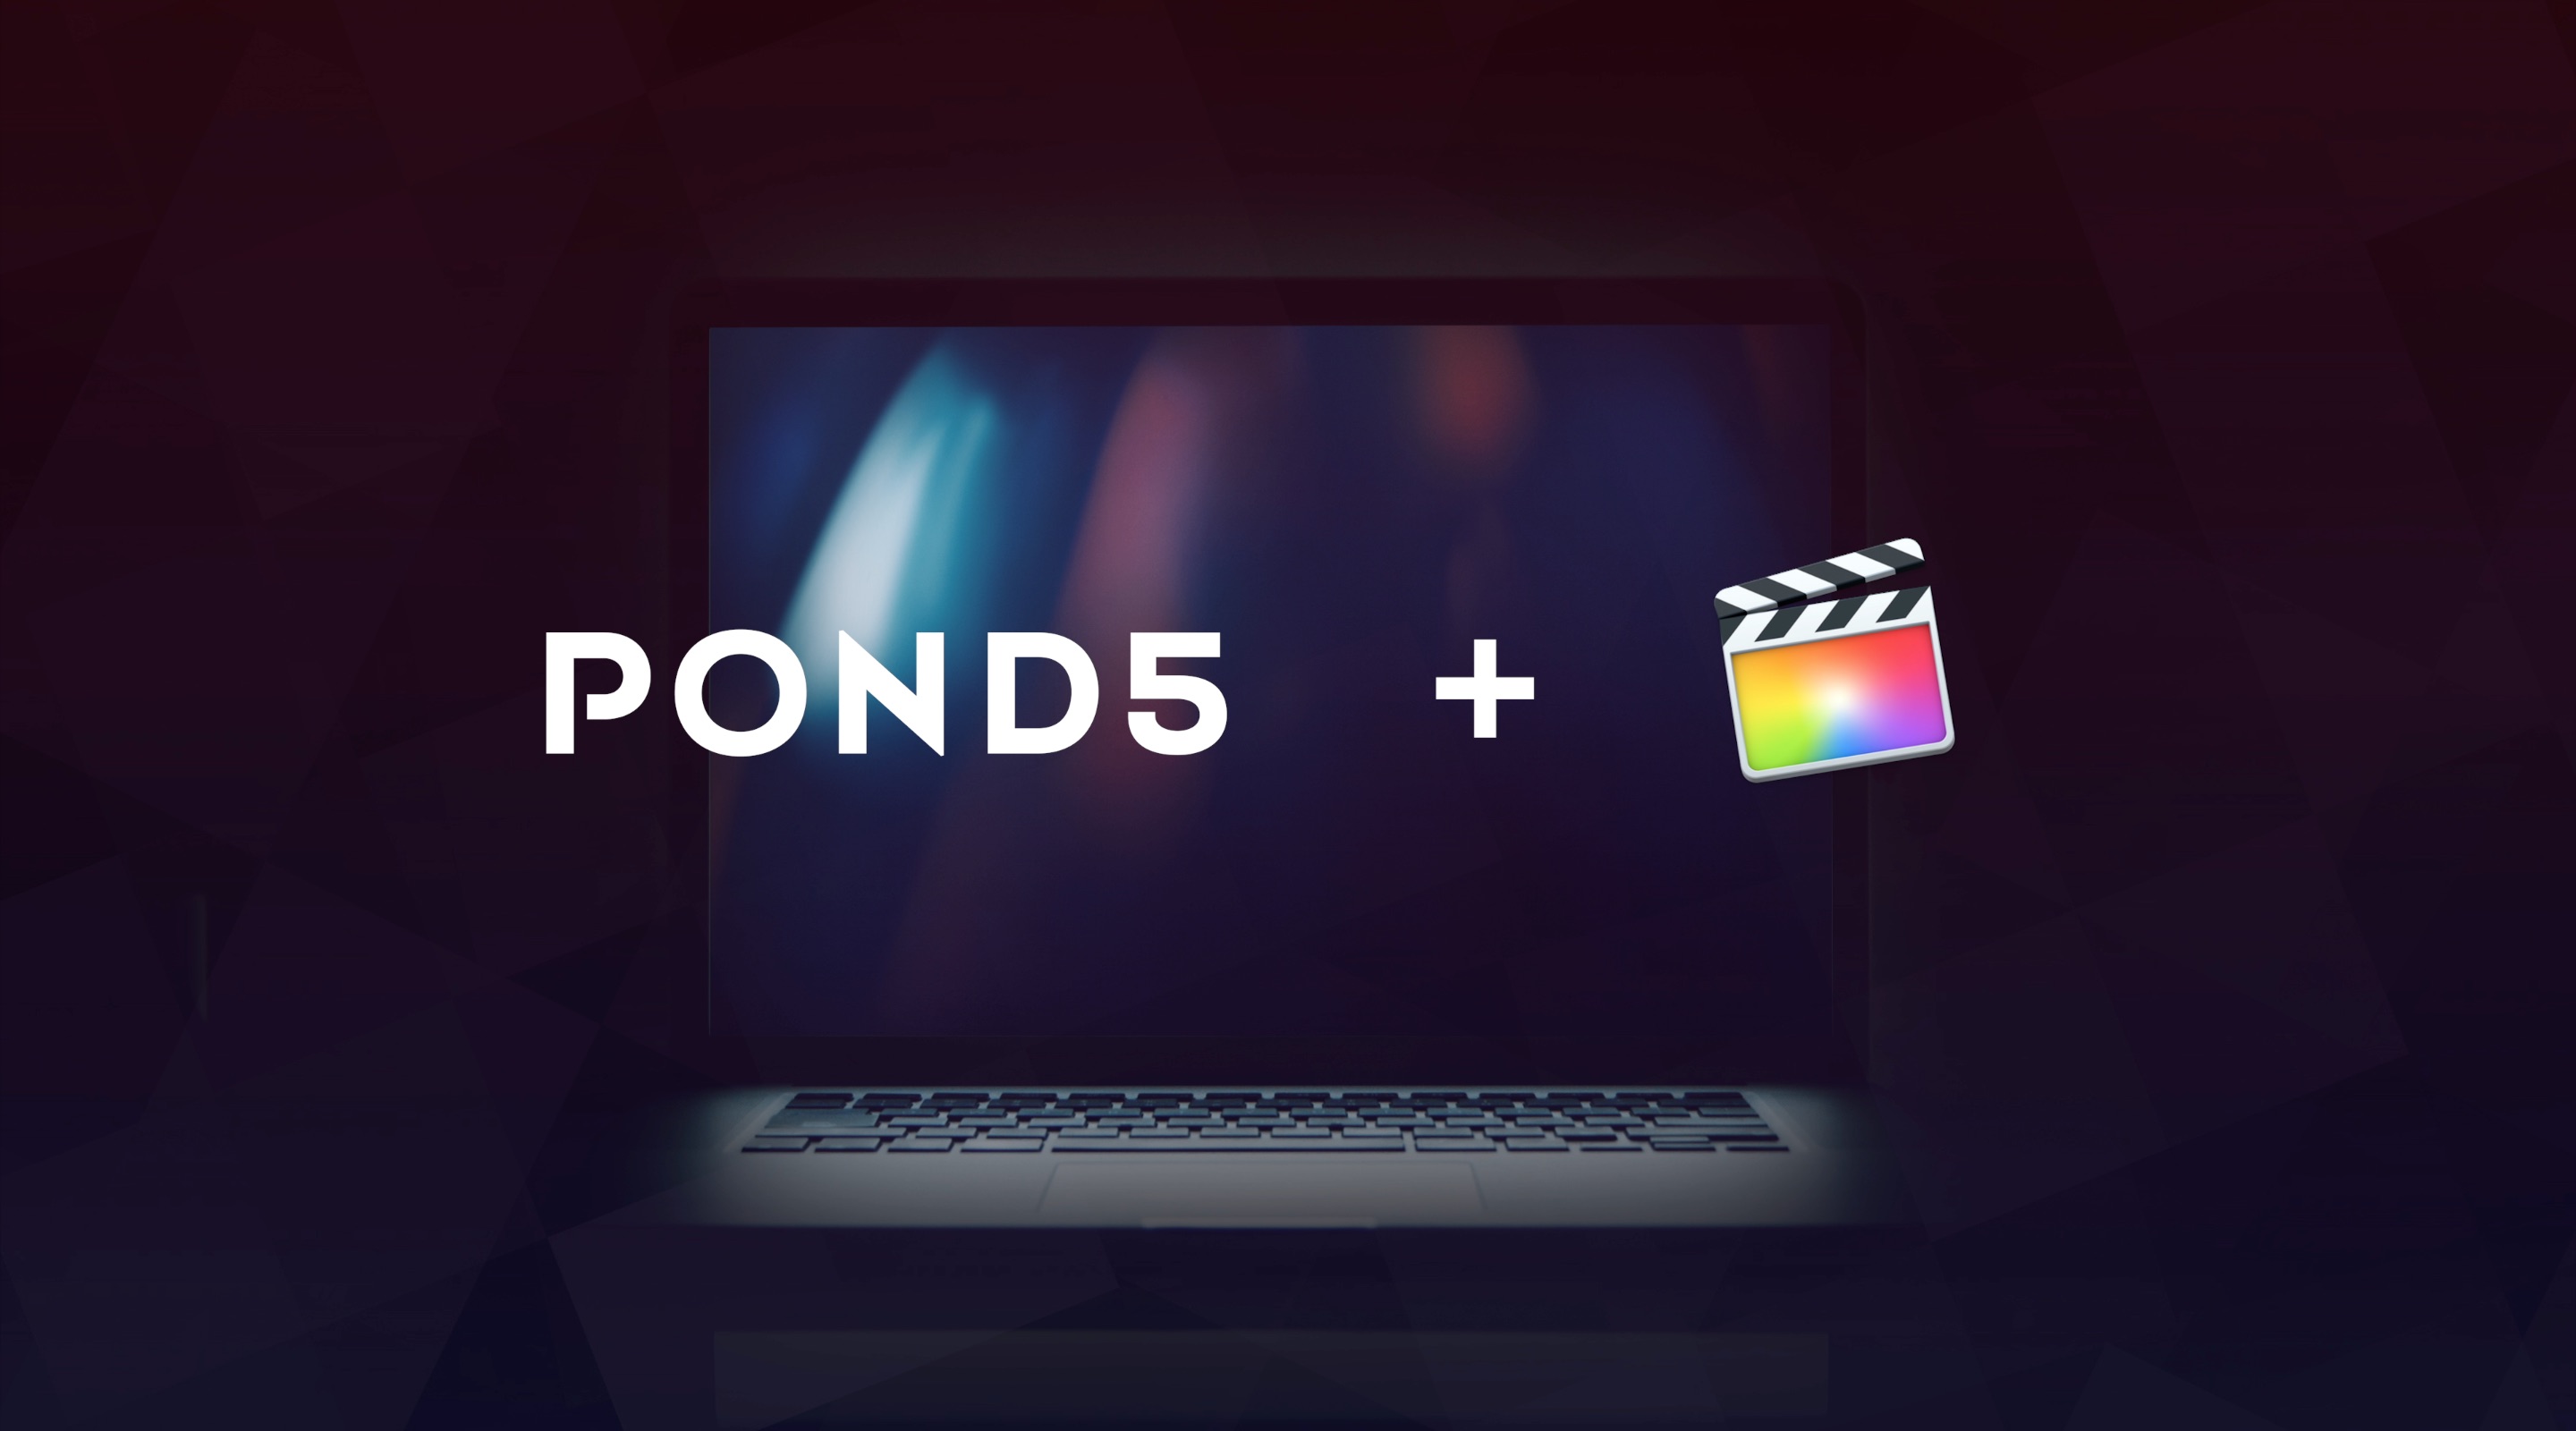 Pond5 app for Apple Final Cut Pro X